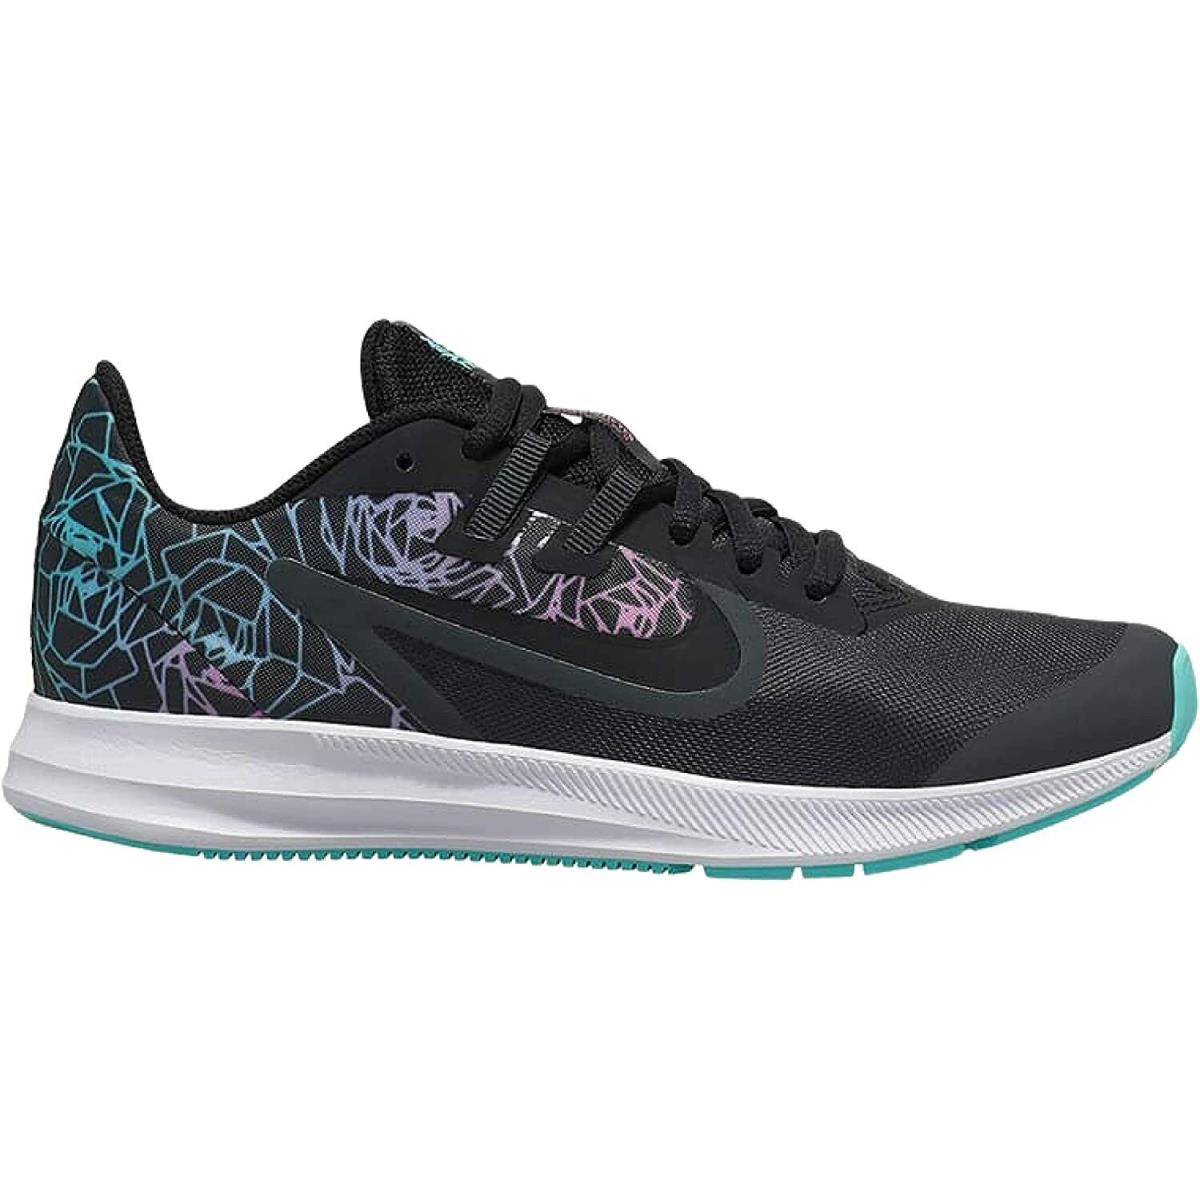 Nike shoes Downshifter Rebel - Anthracite/Black/Light Aqua 6